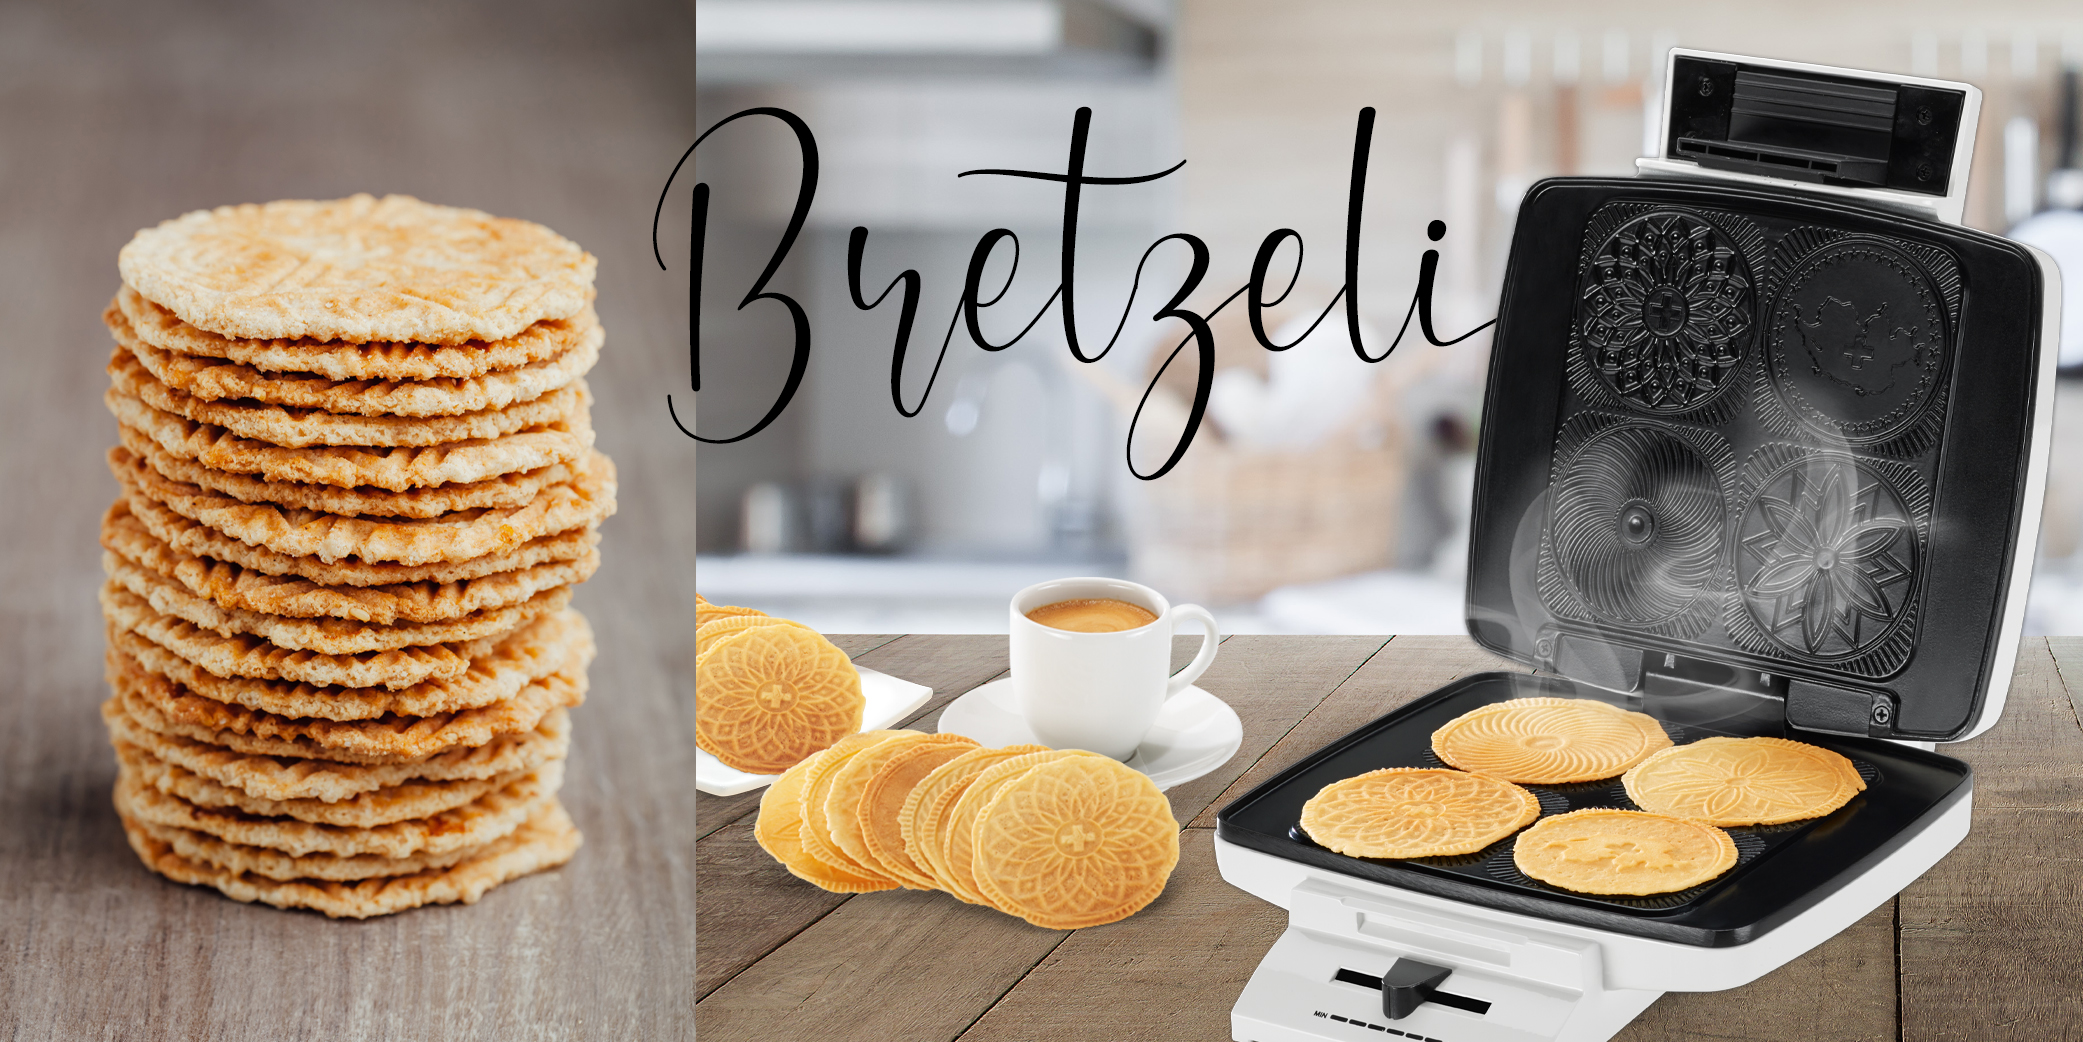 Trisa Fer à bricelets Bretzeli & Waffles